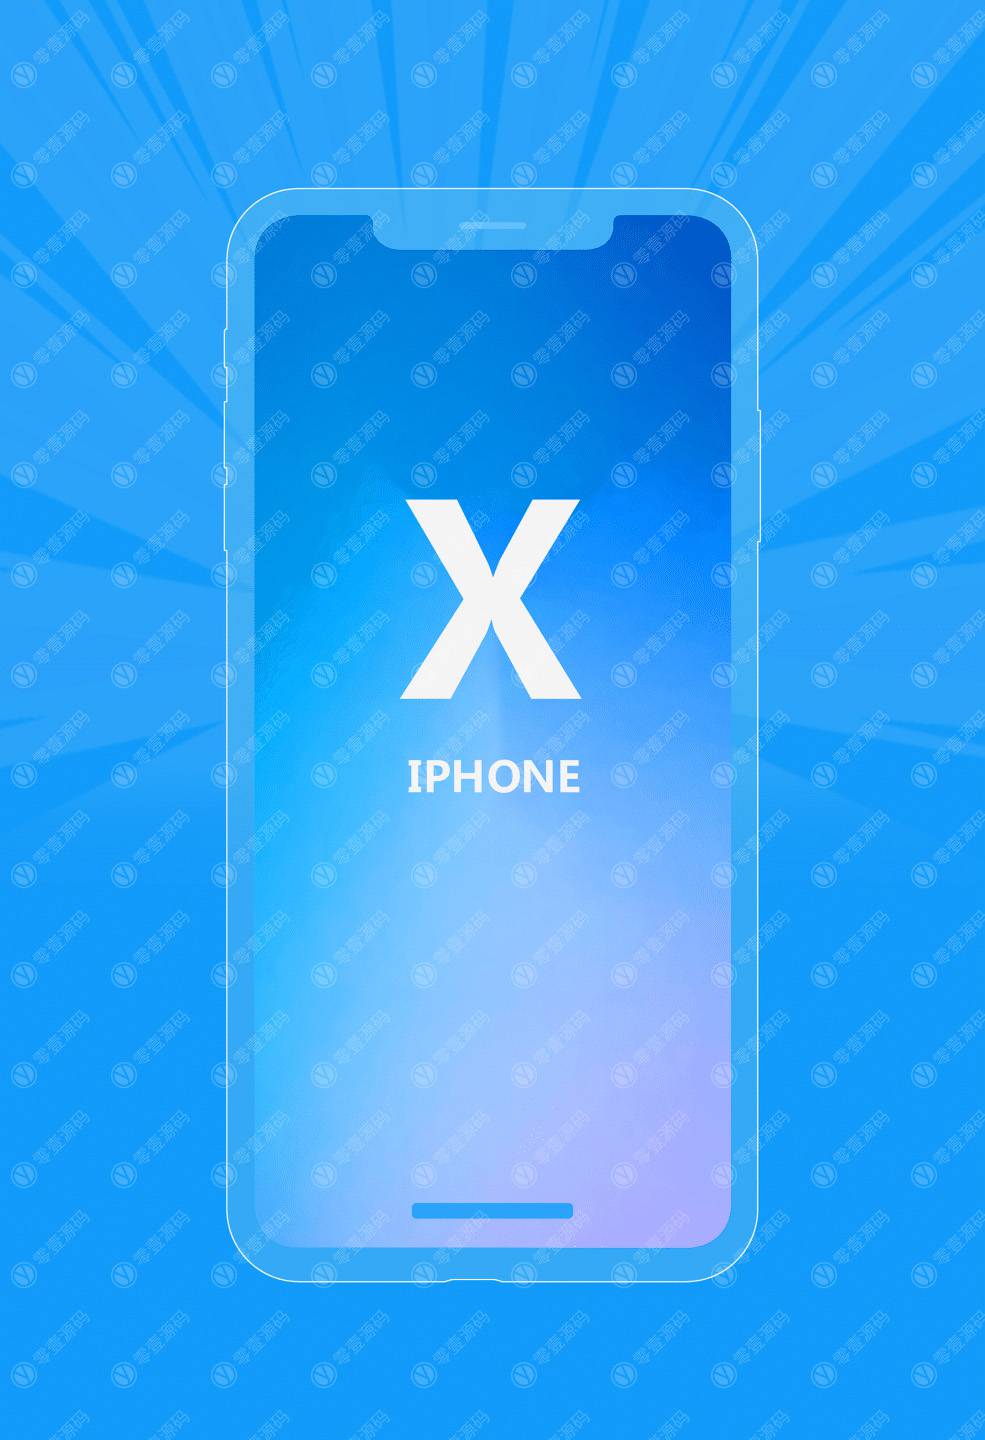 iPhoneX Mockups 蓝色矢量苹果X手机样机模型素材psd源文件